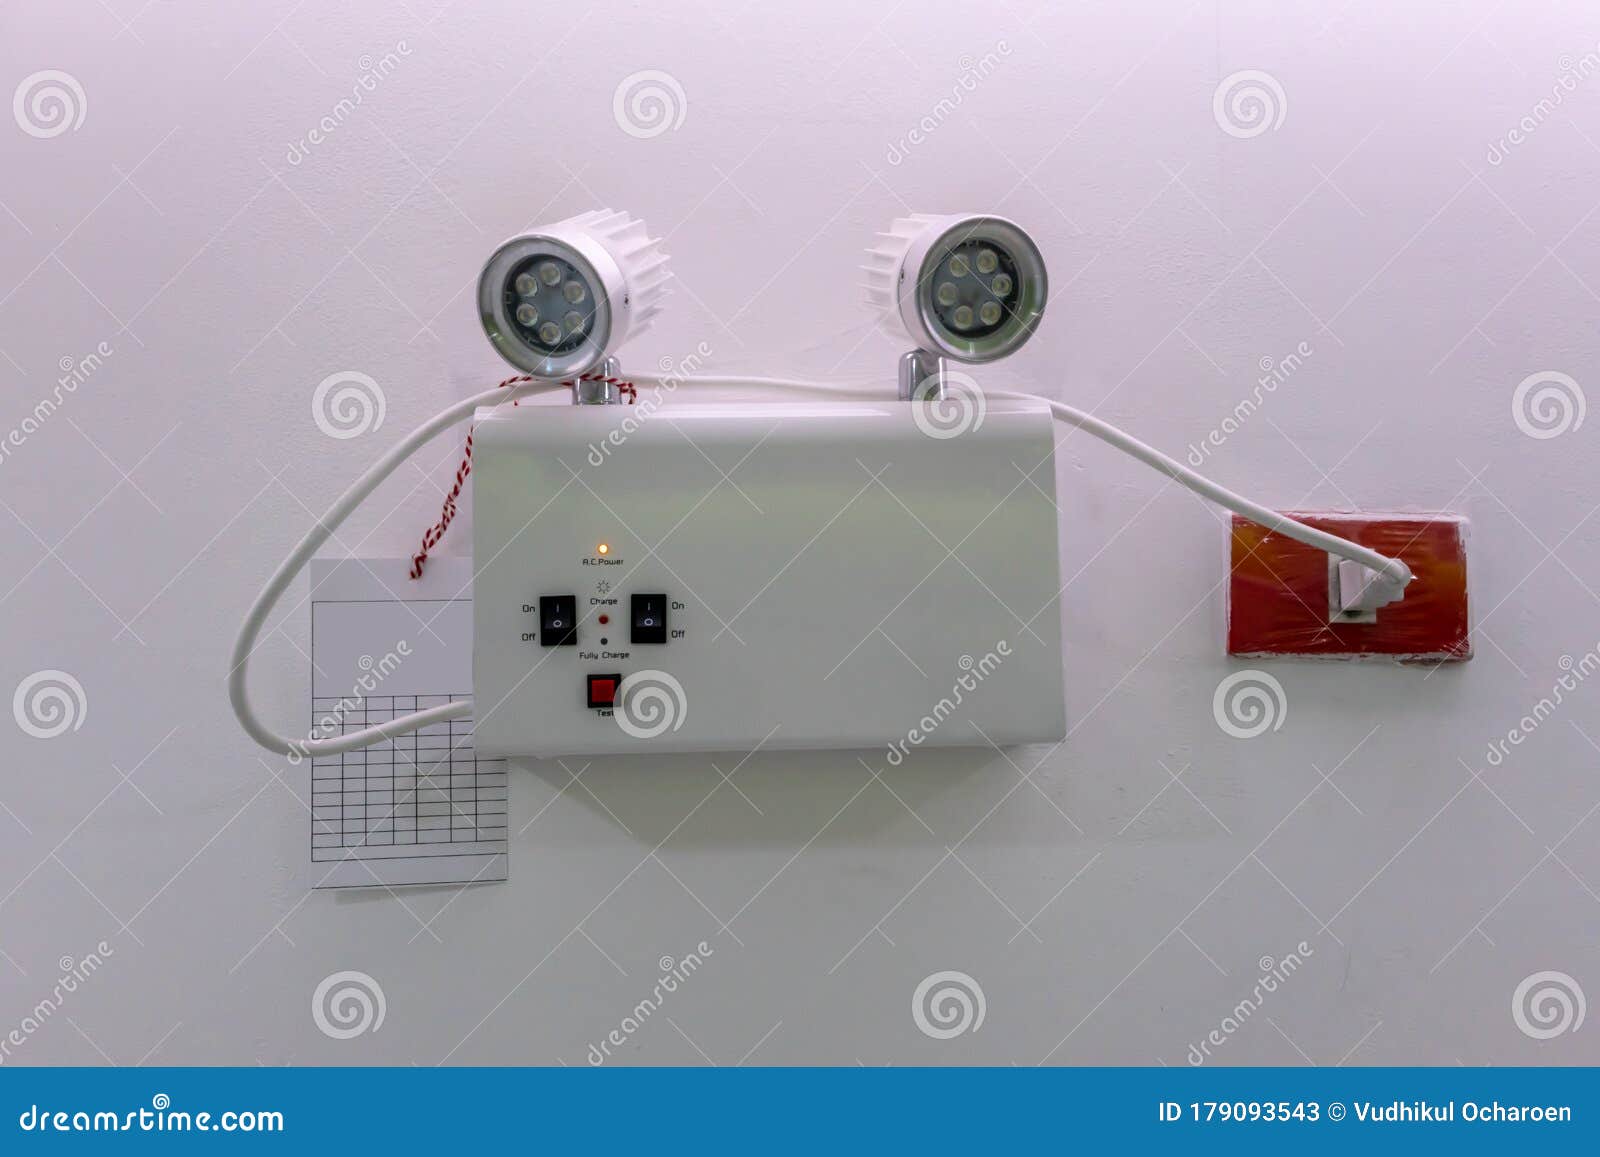 Emergency Light Auto Lighting Working Stock Image - Image of